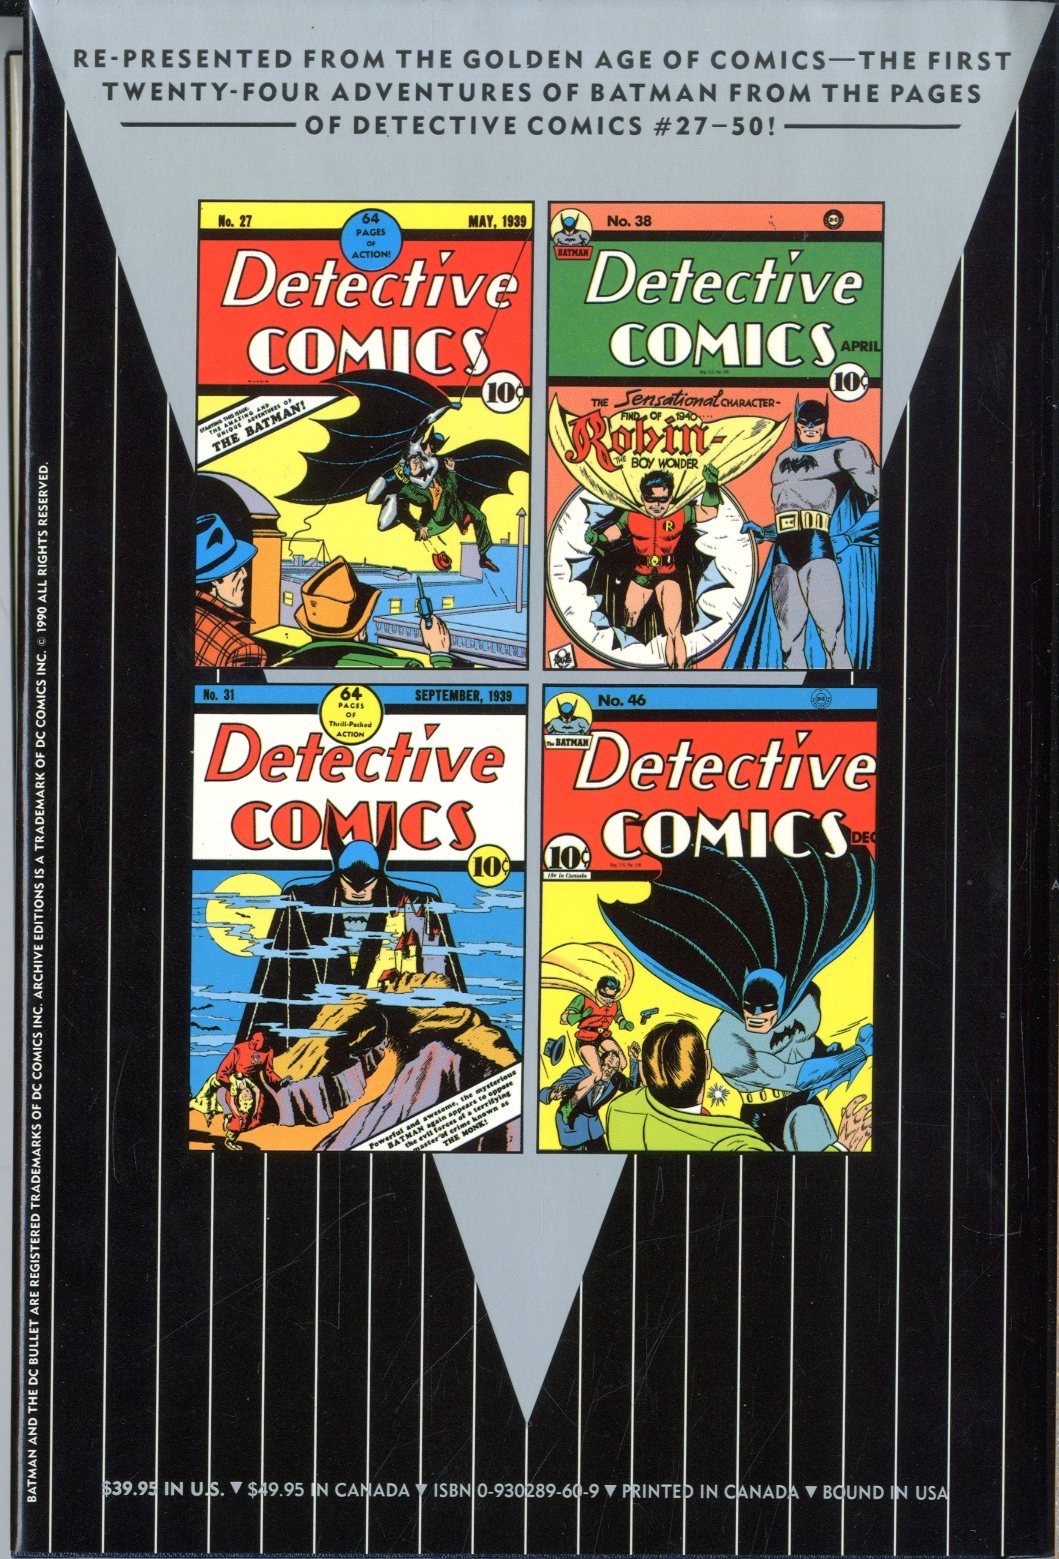 Archive Editions Batman  - 12825